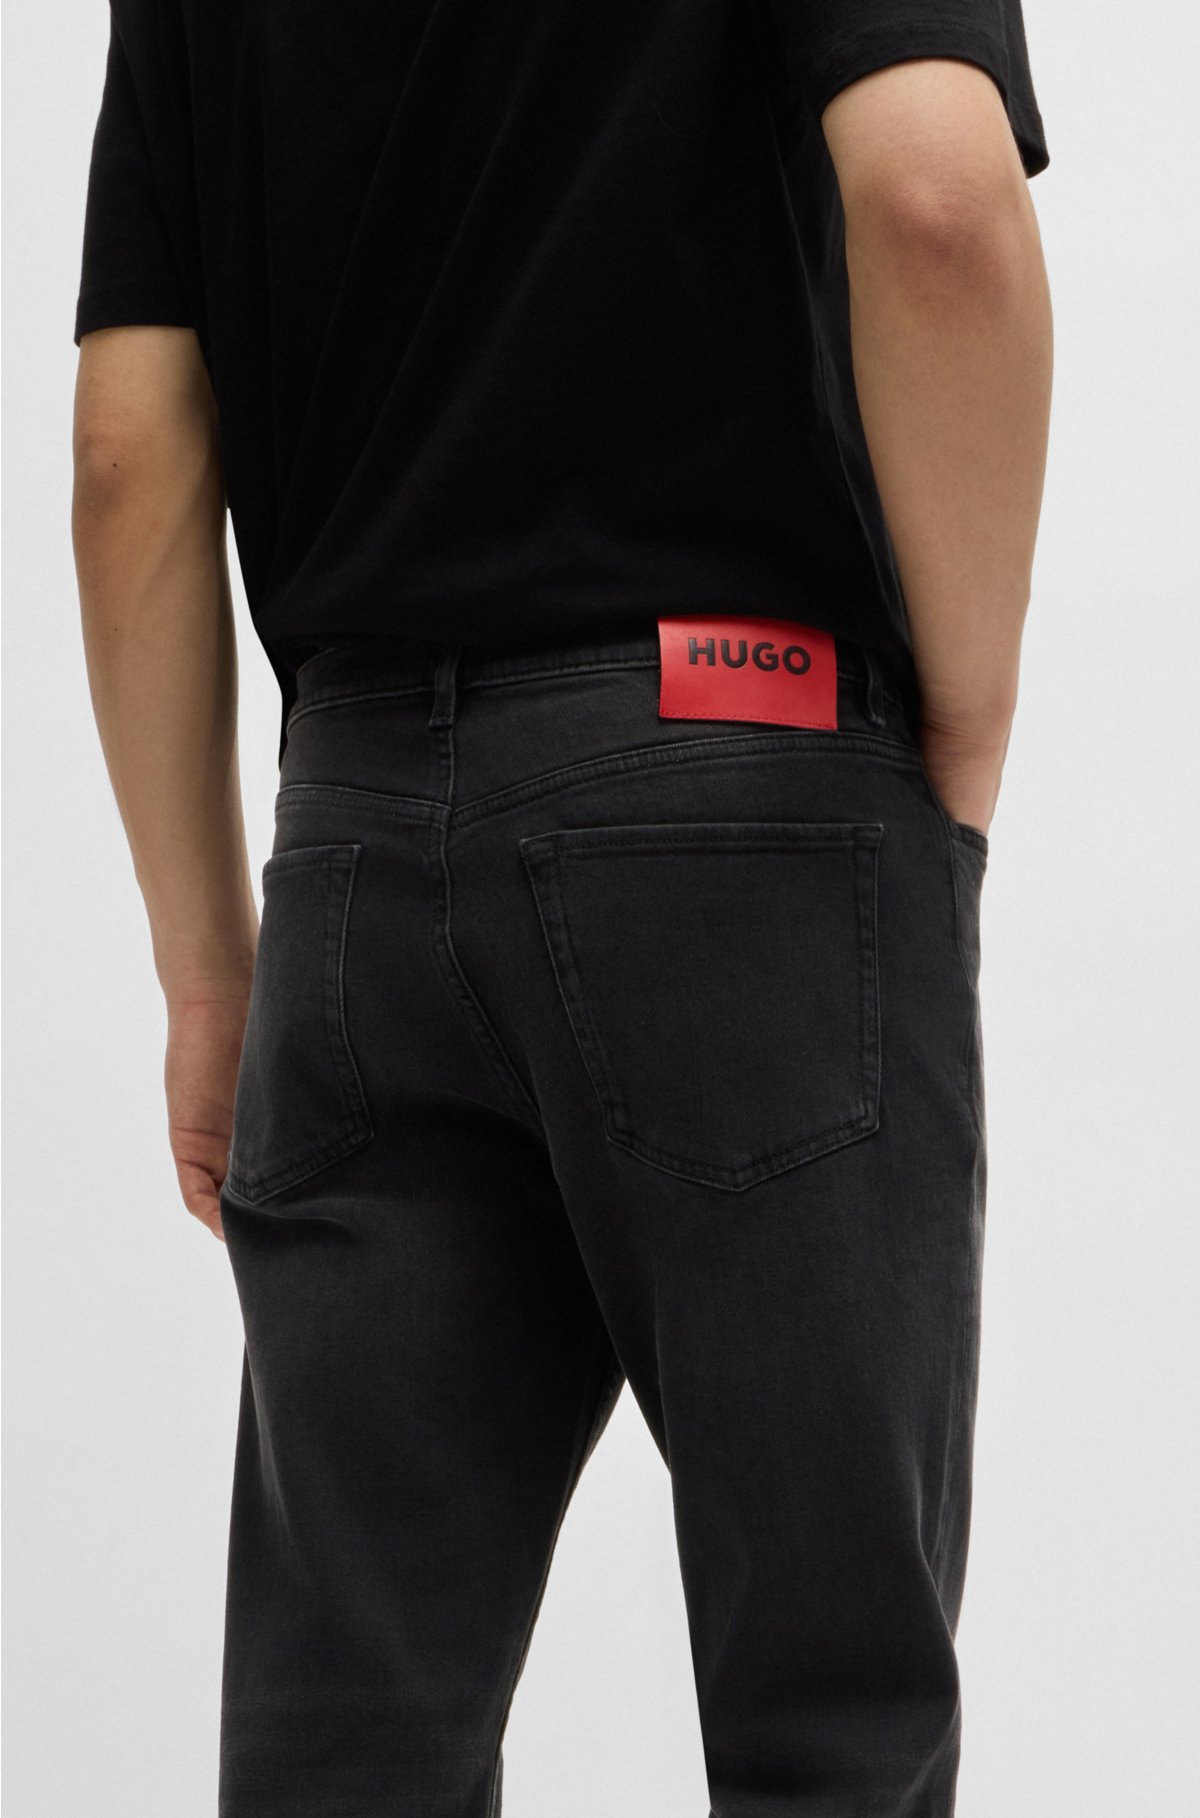 Tapered-fit jeans in black-black stretch denim, Black